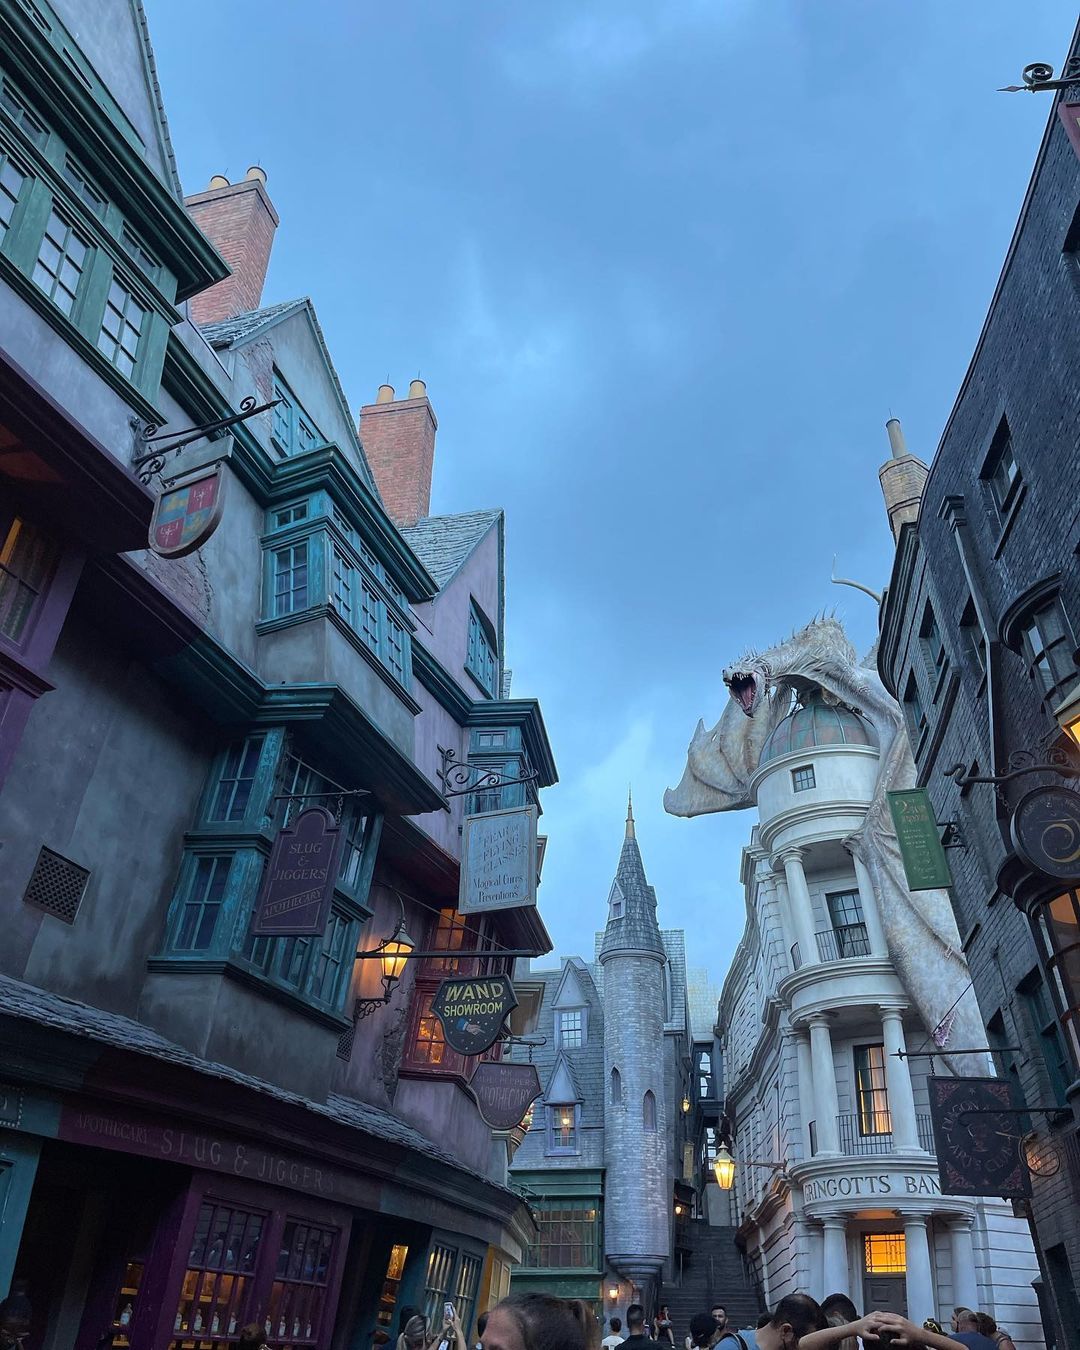 Diagon Alley - Harry Potter Area at Universal Studios